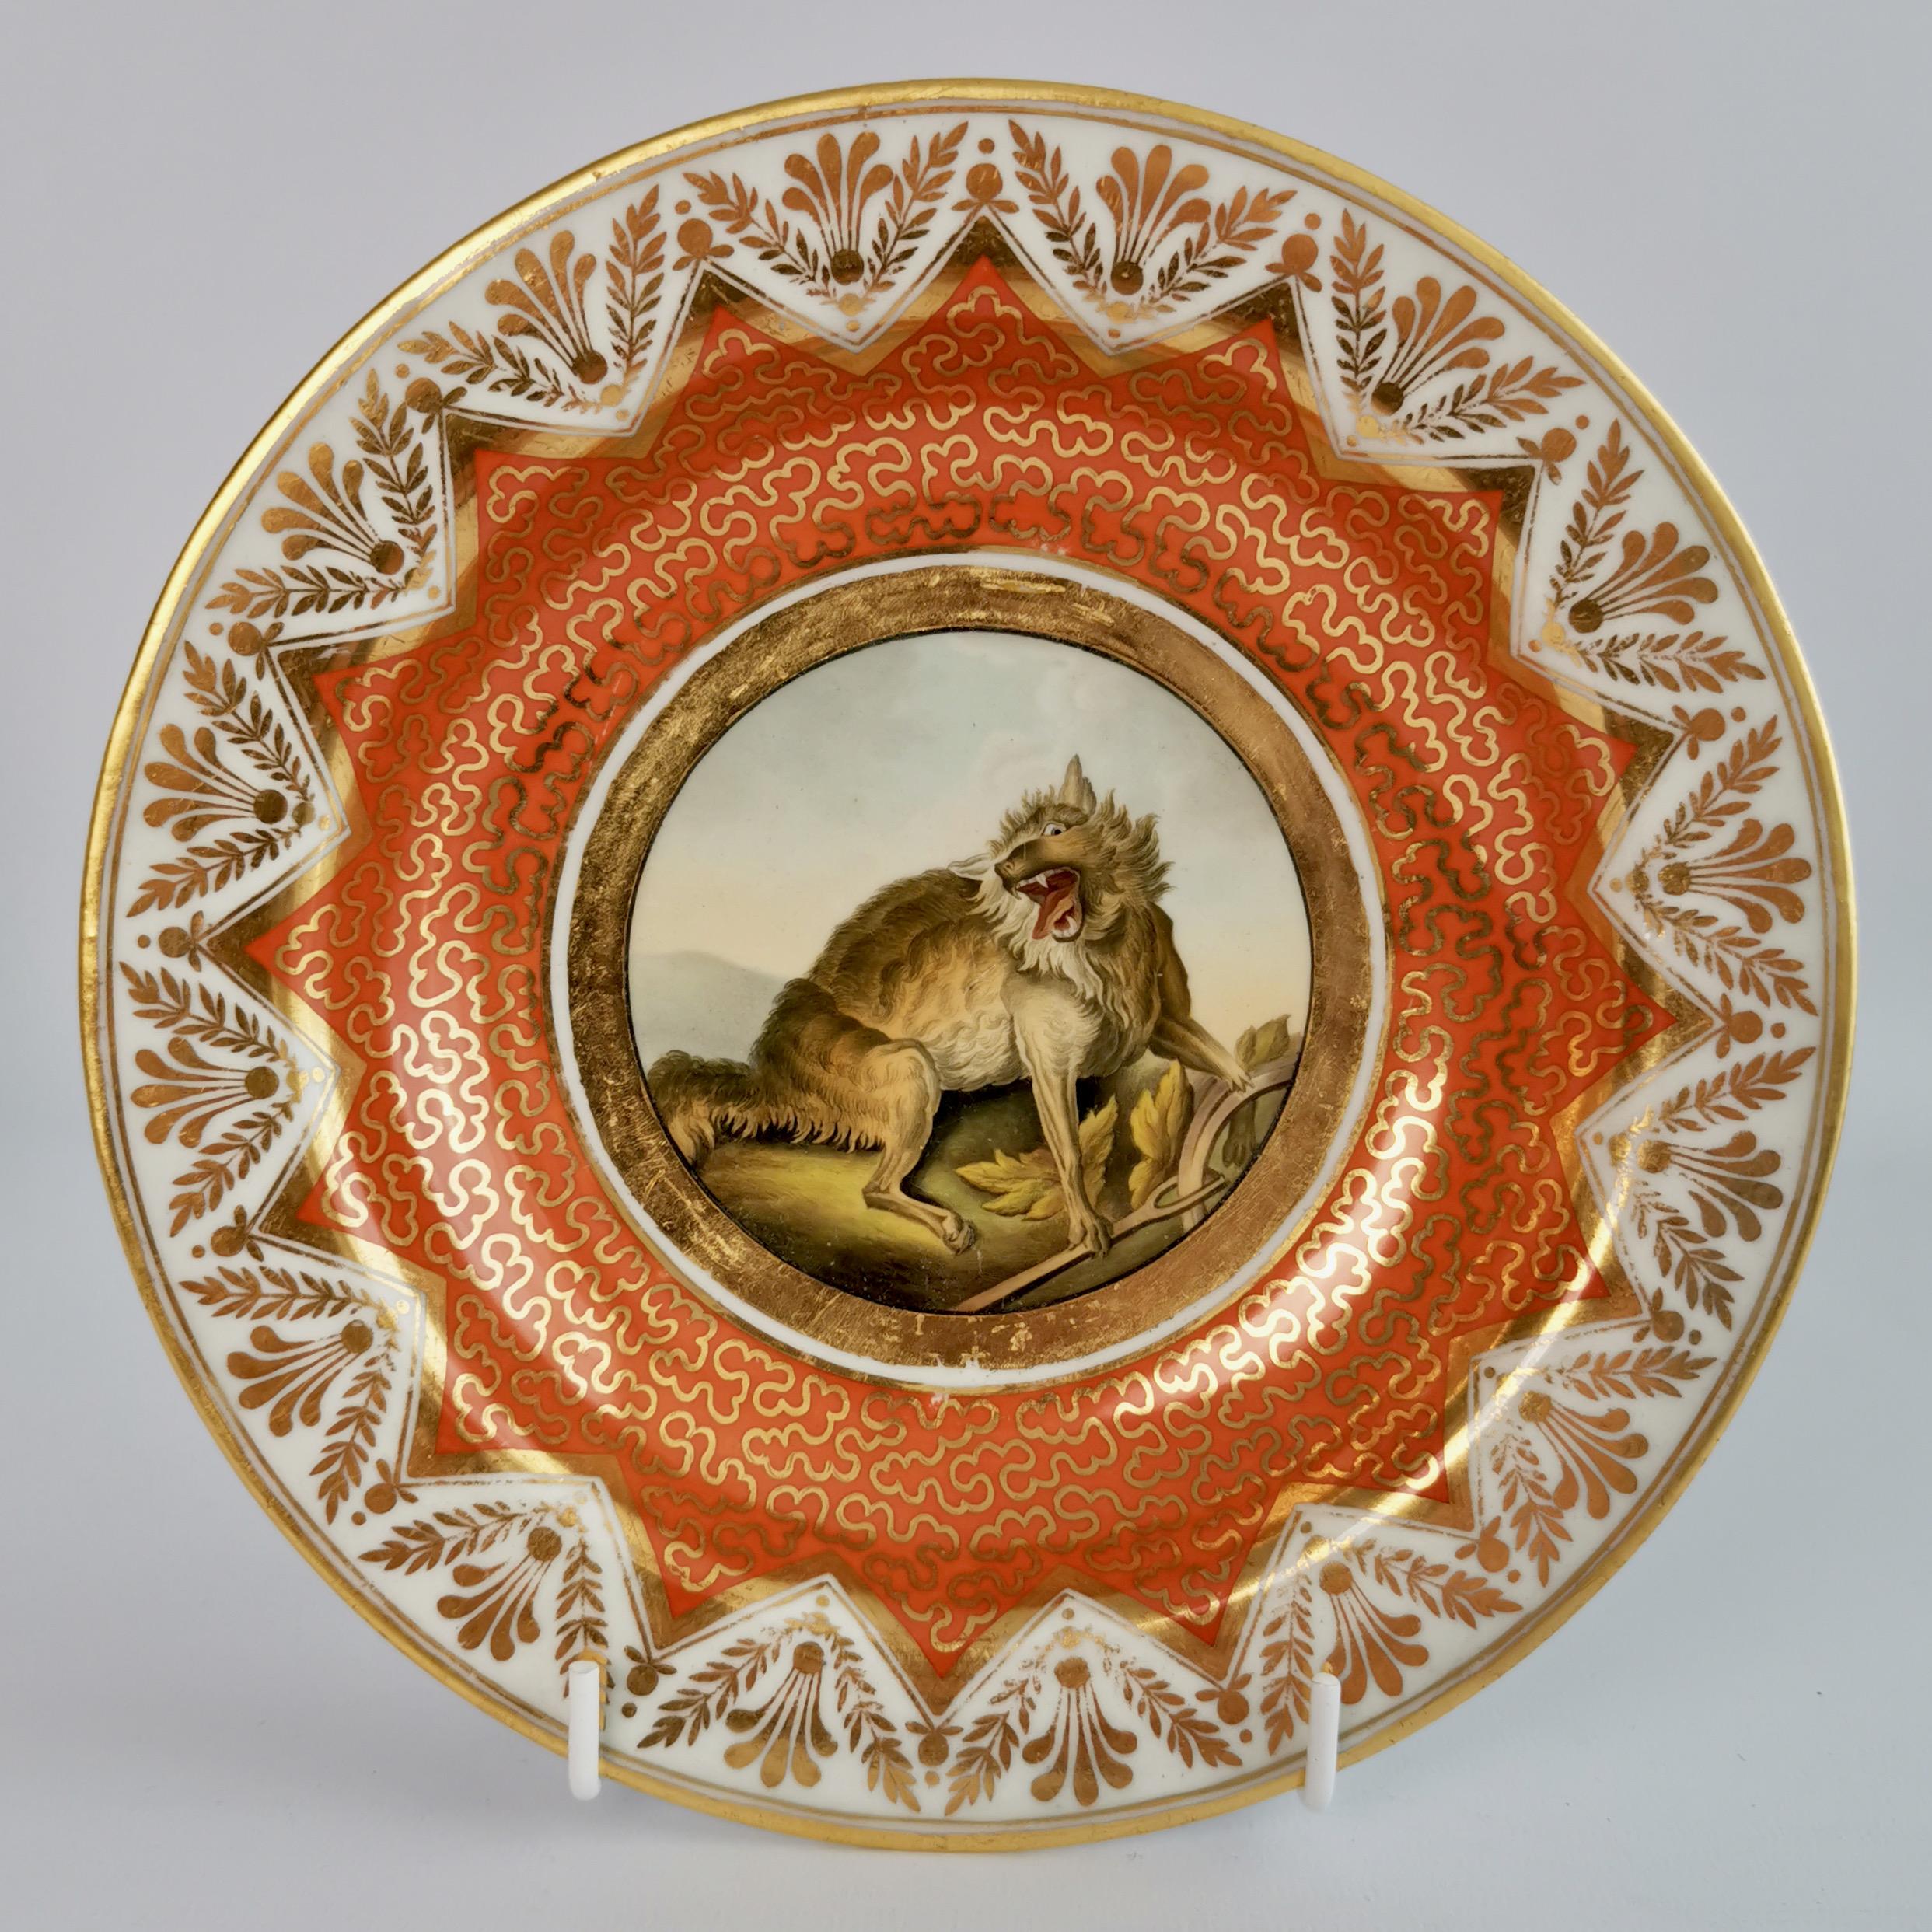 Chamberlains Worcester Porcelain Dessert Service, Orange, Regency, circa 1815 1